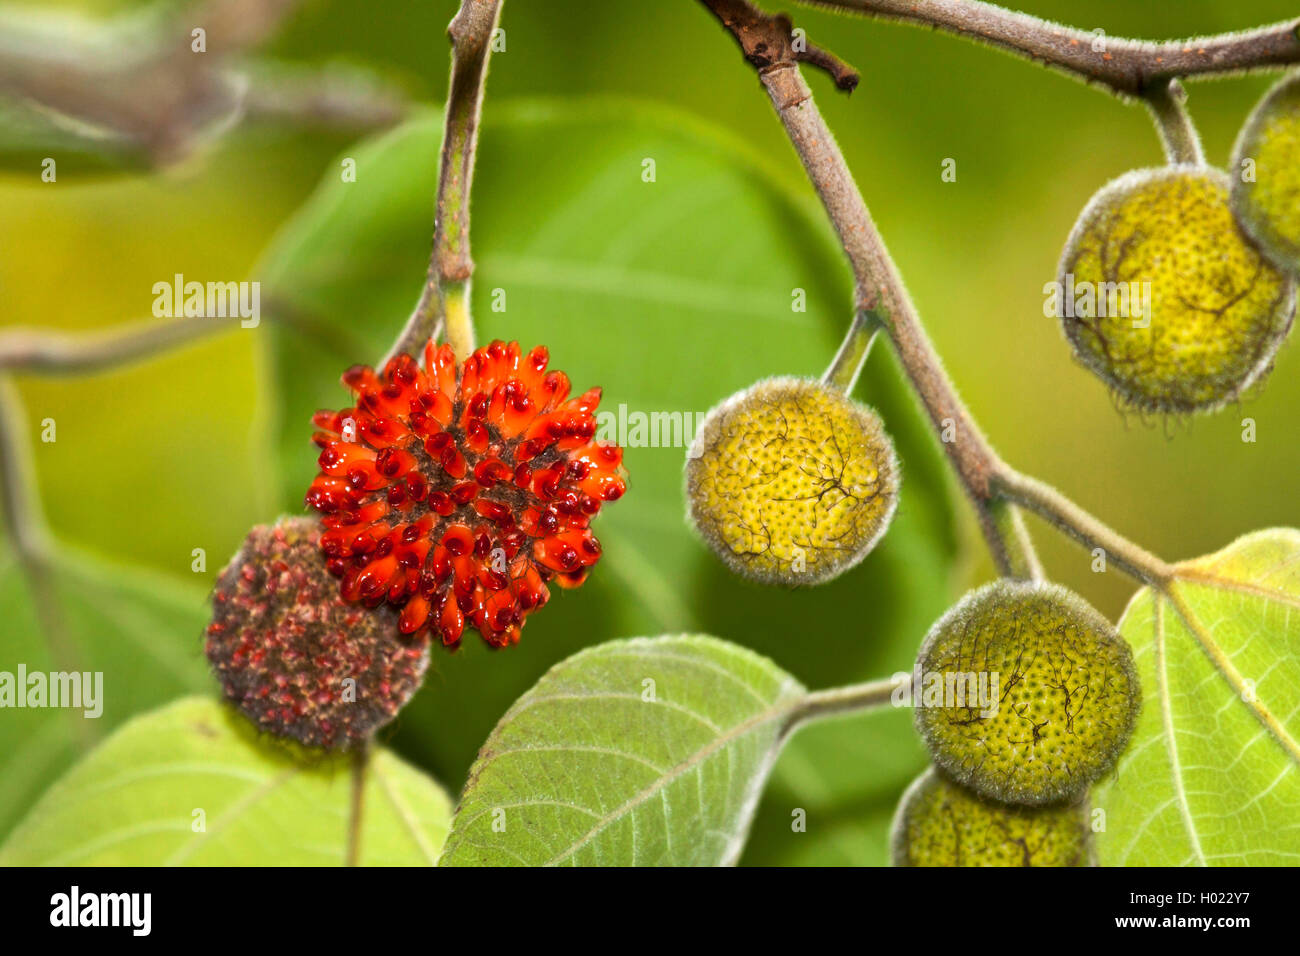 Papiermaulbeerbaum, Papier-Maulbeerbaum (Broussonetia papyrifera), fruchtender Ast | carta di gelso (Broussonetia papyrifera), f Foto Stock